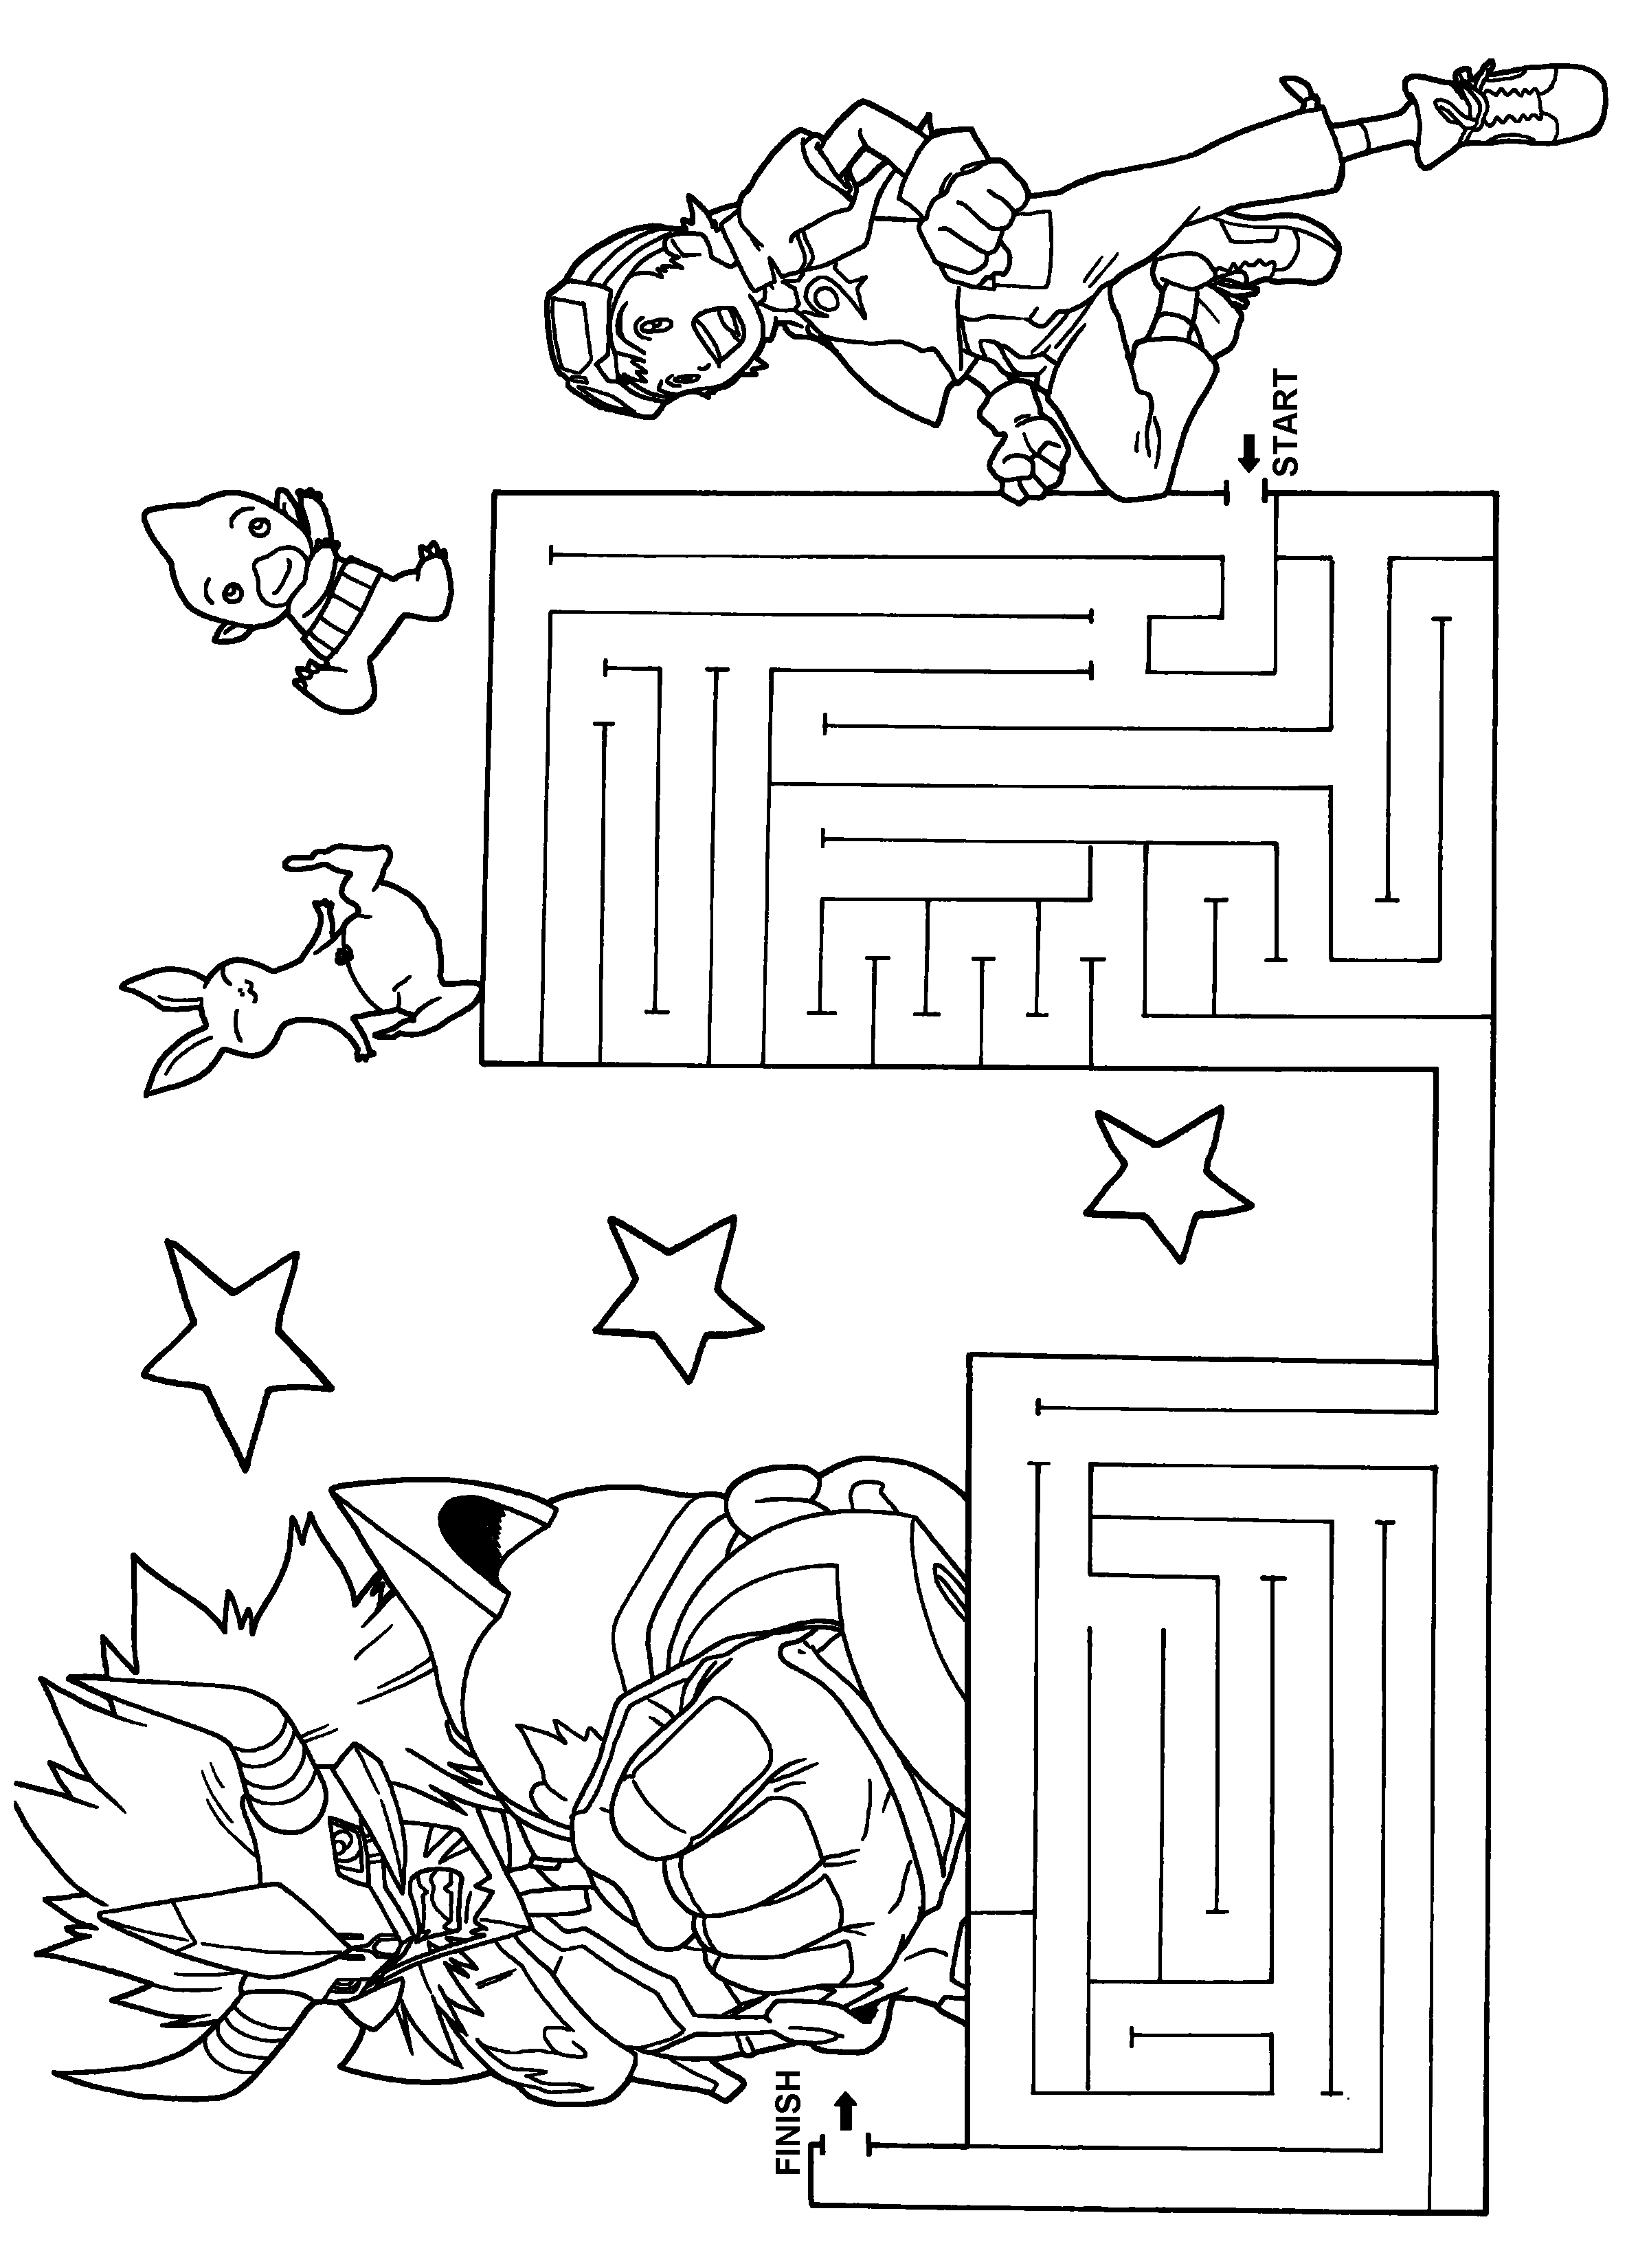 Digimon coloriages